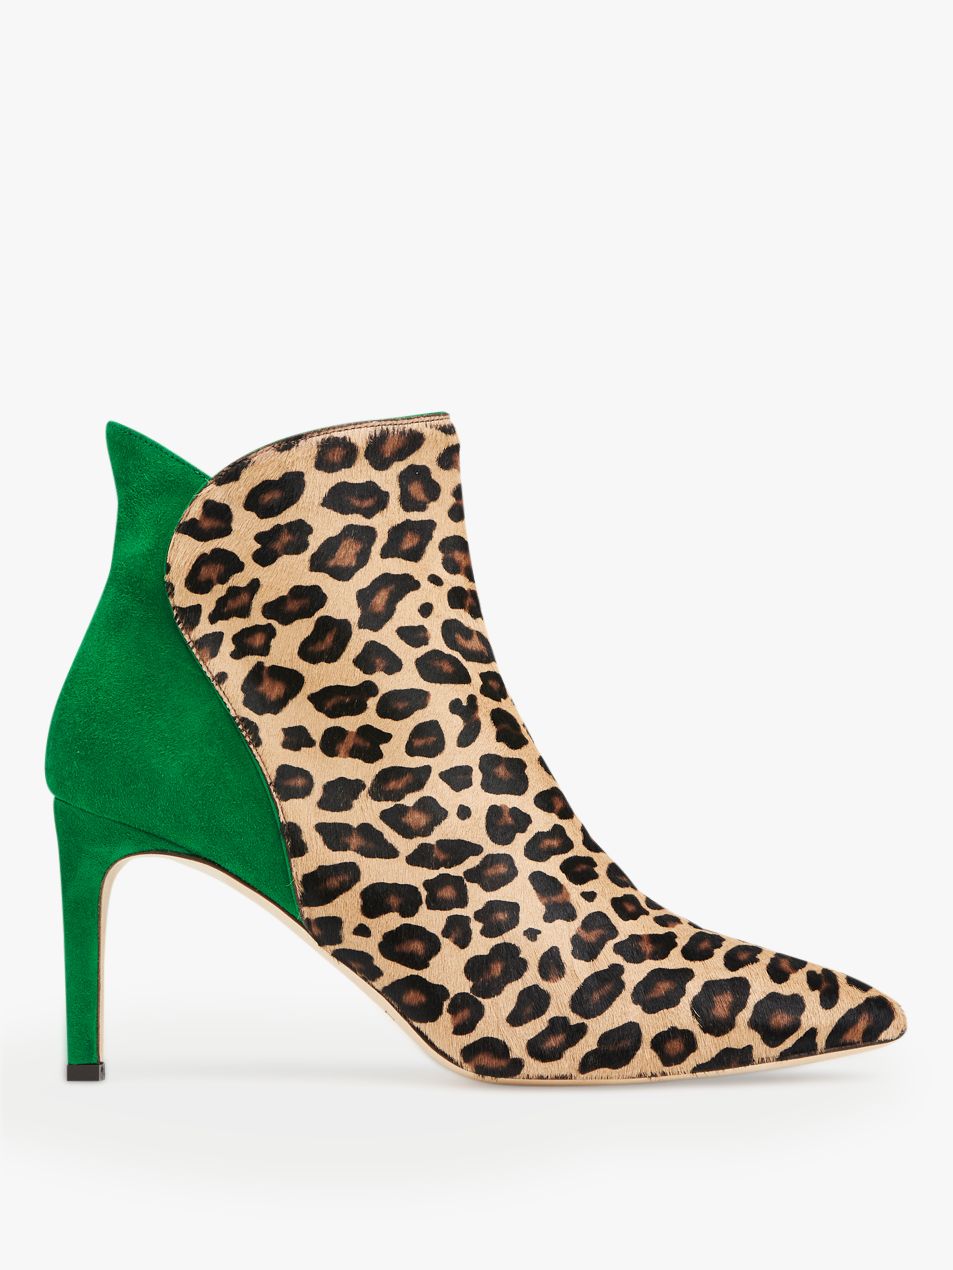 L.K.Bennett Maja Stiletto Heel Ankle Boots, Green/Leopard Leather